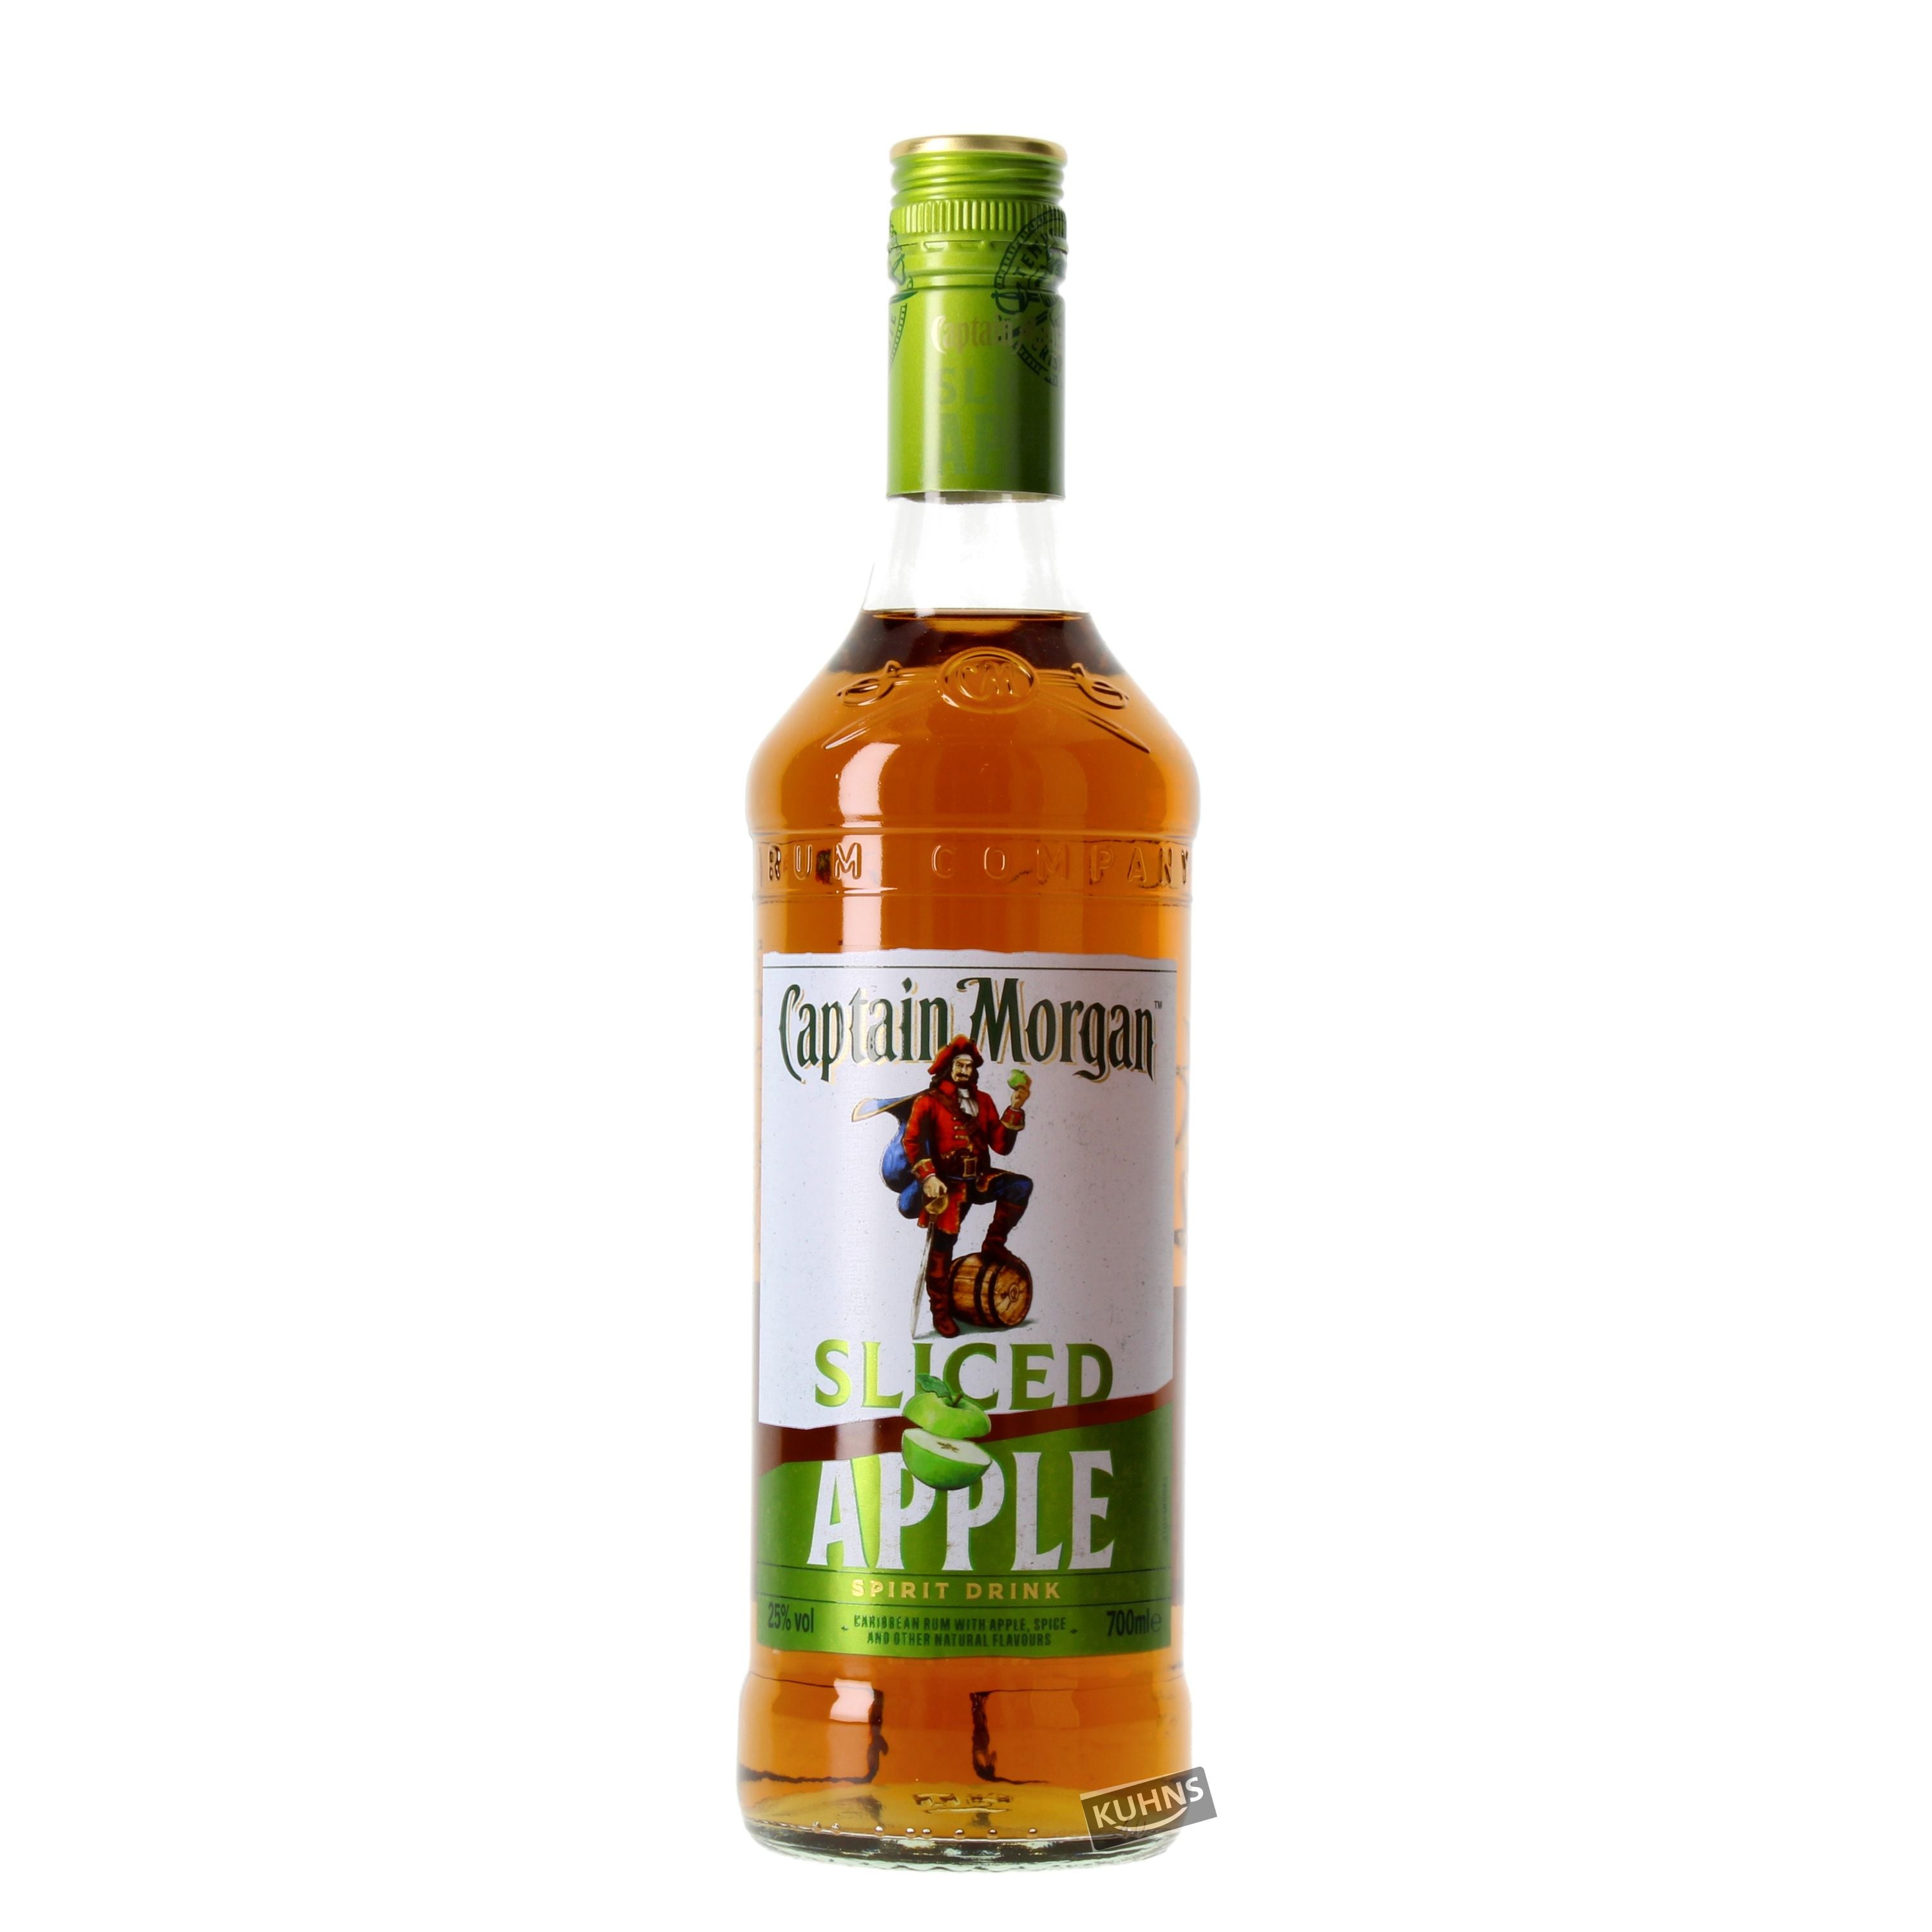 Captain Morgan Apple 0.7l, alc. 25% by volume, spirit drink